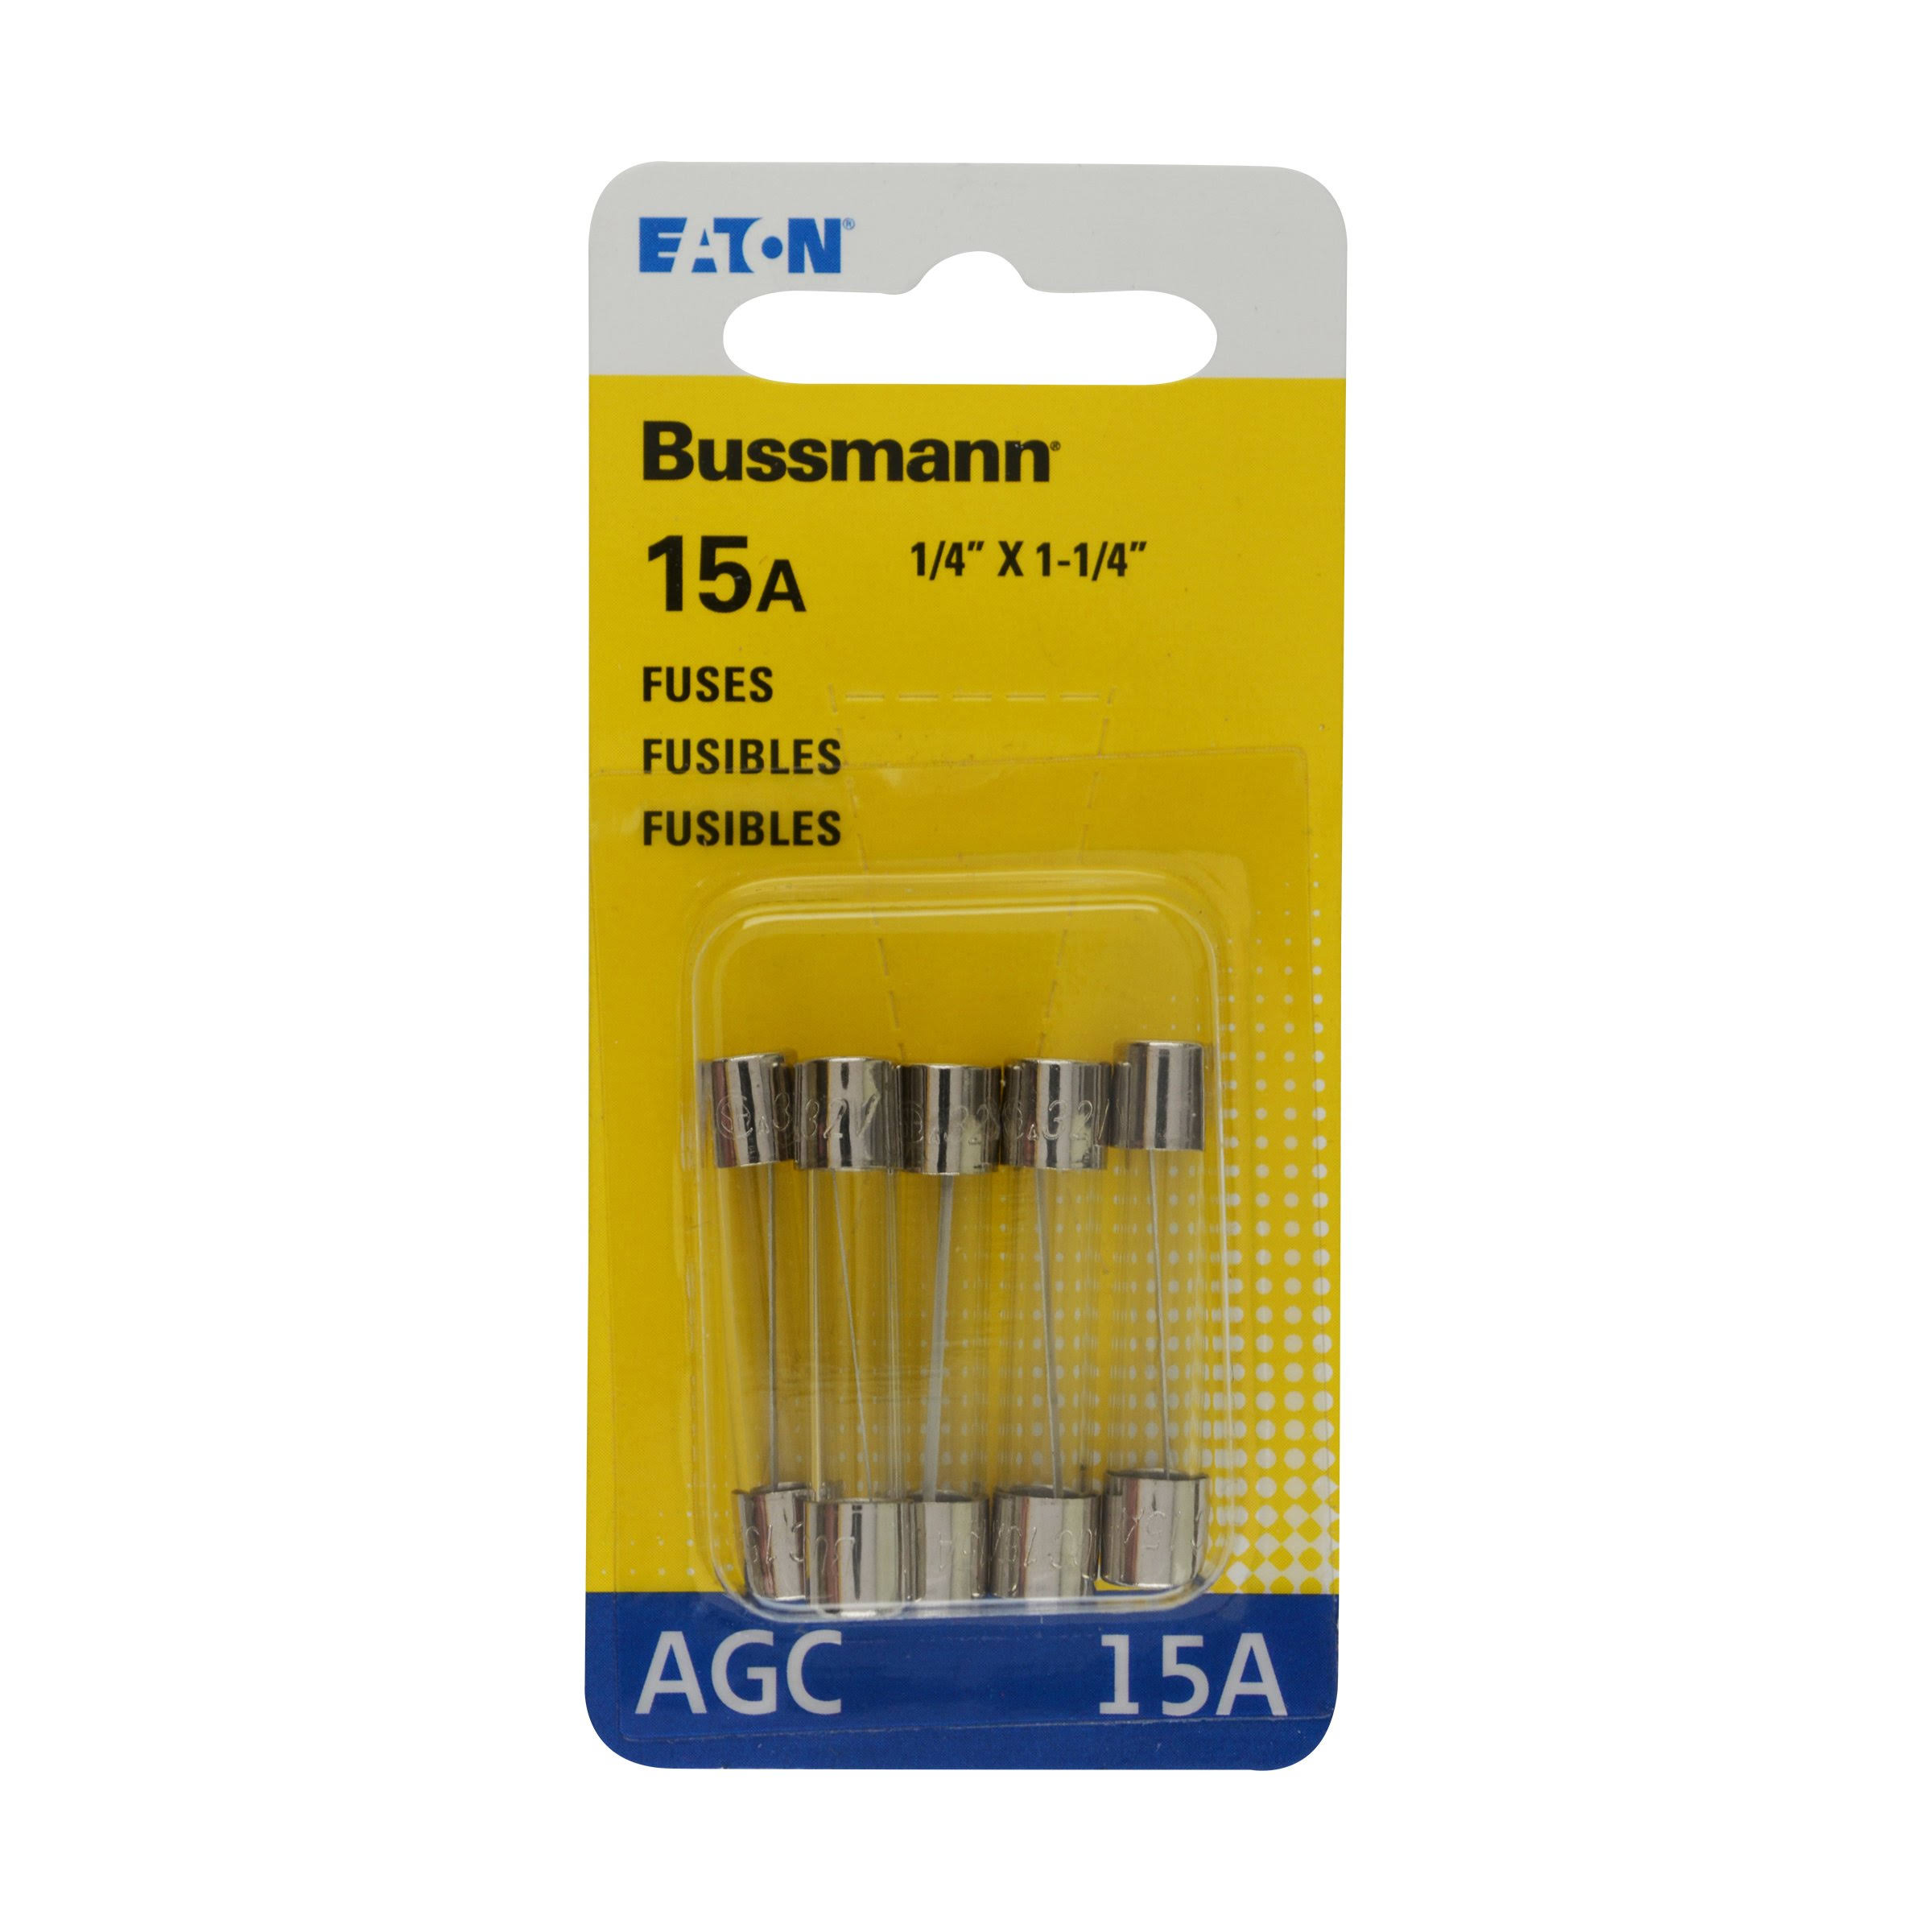 Bussmann Fuse - 15A, Glass, 5 Fuses